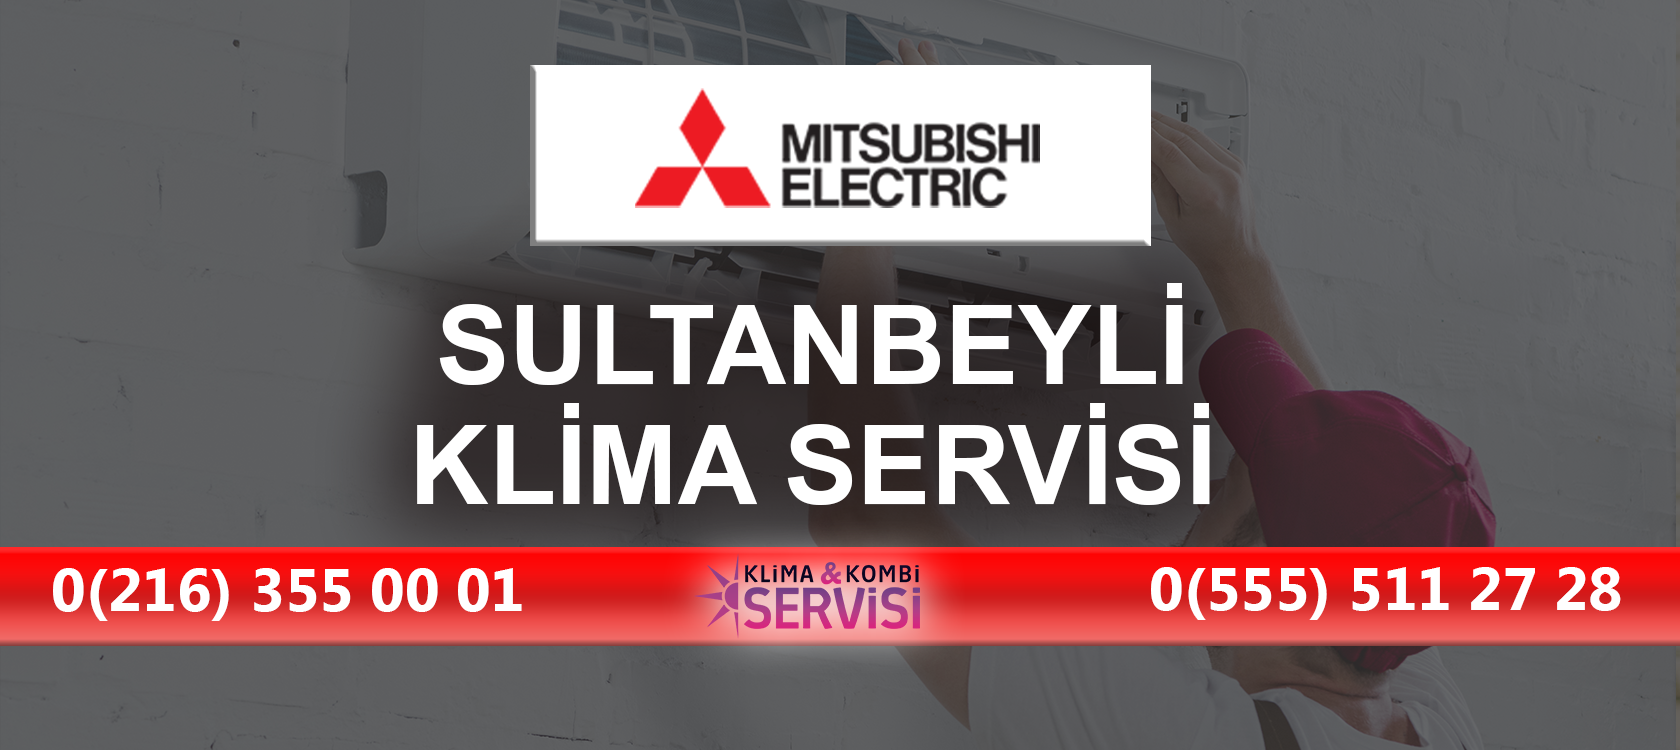 Sultanbeyli Mitsubishi Klima Servisi